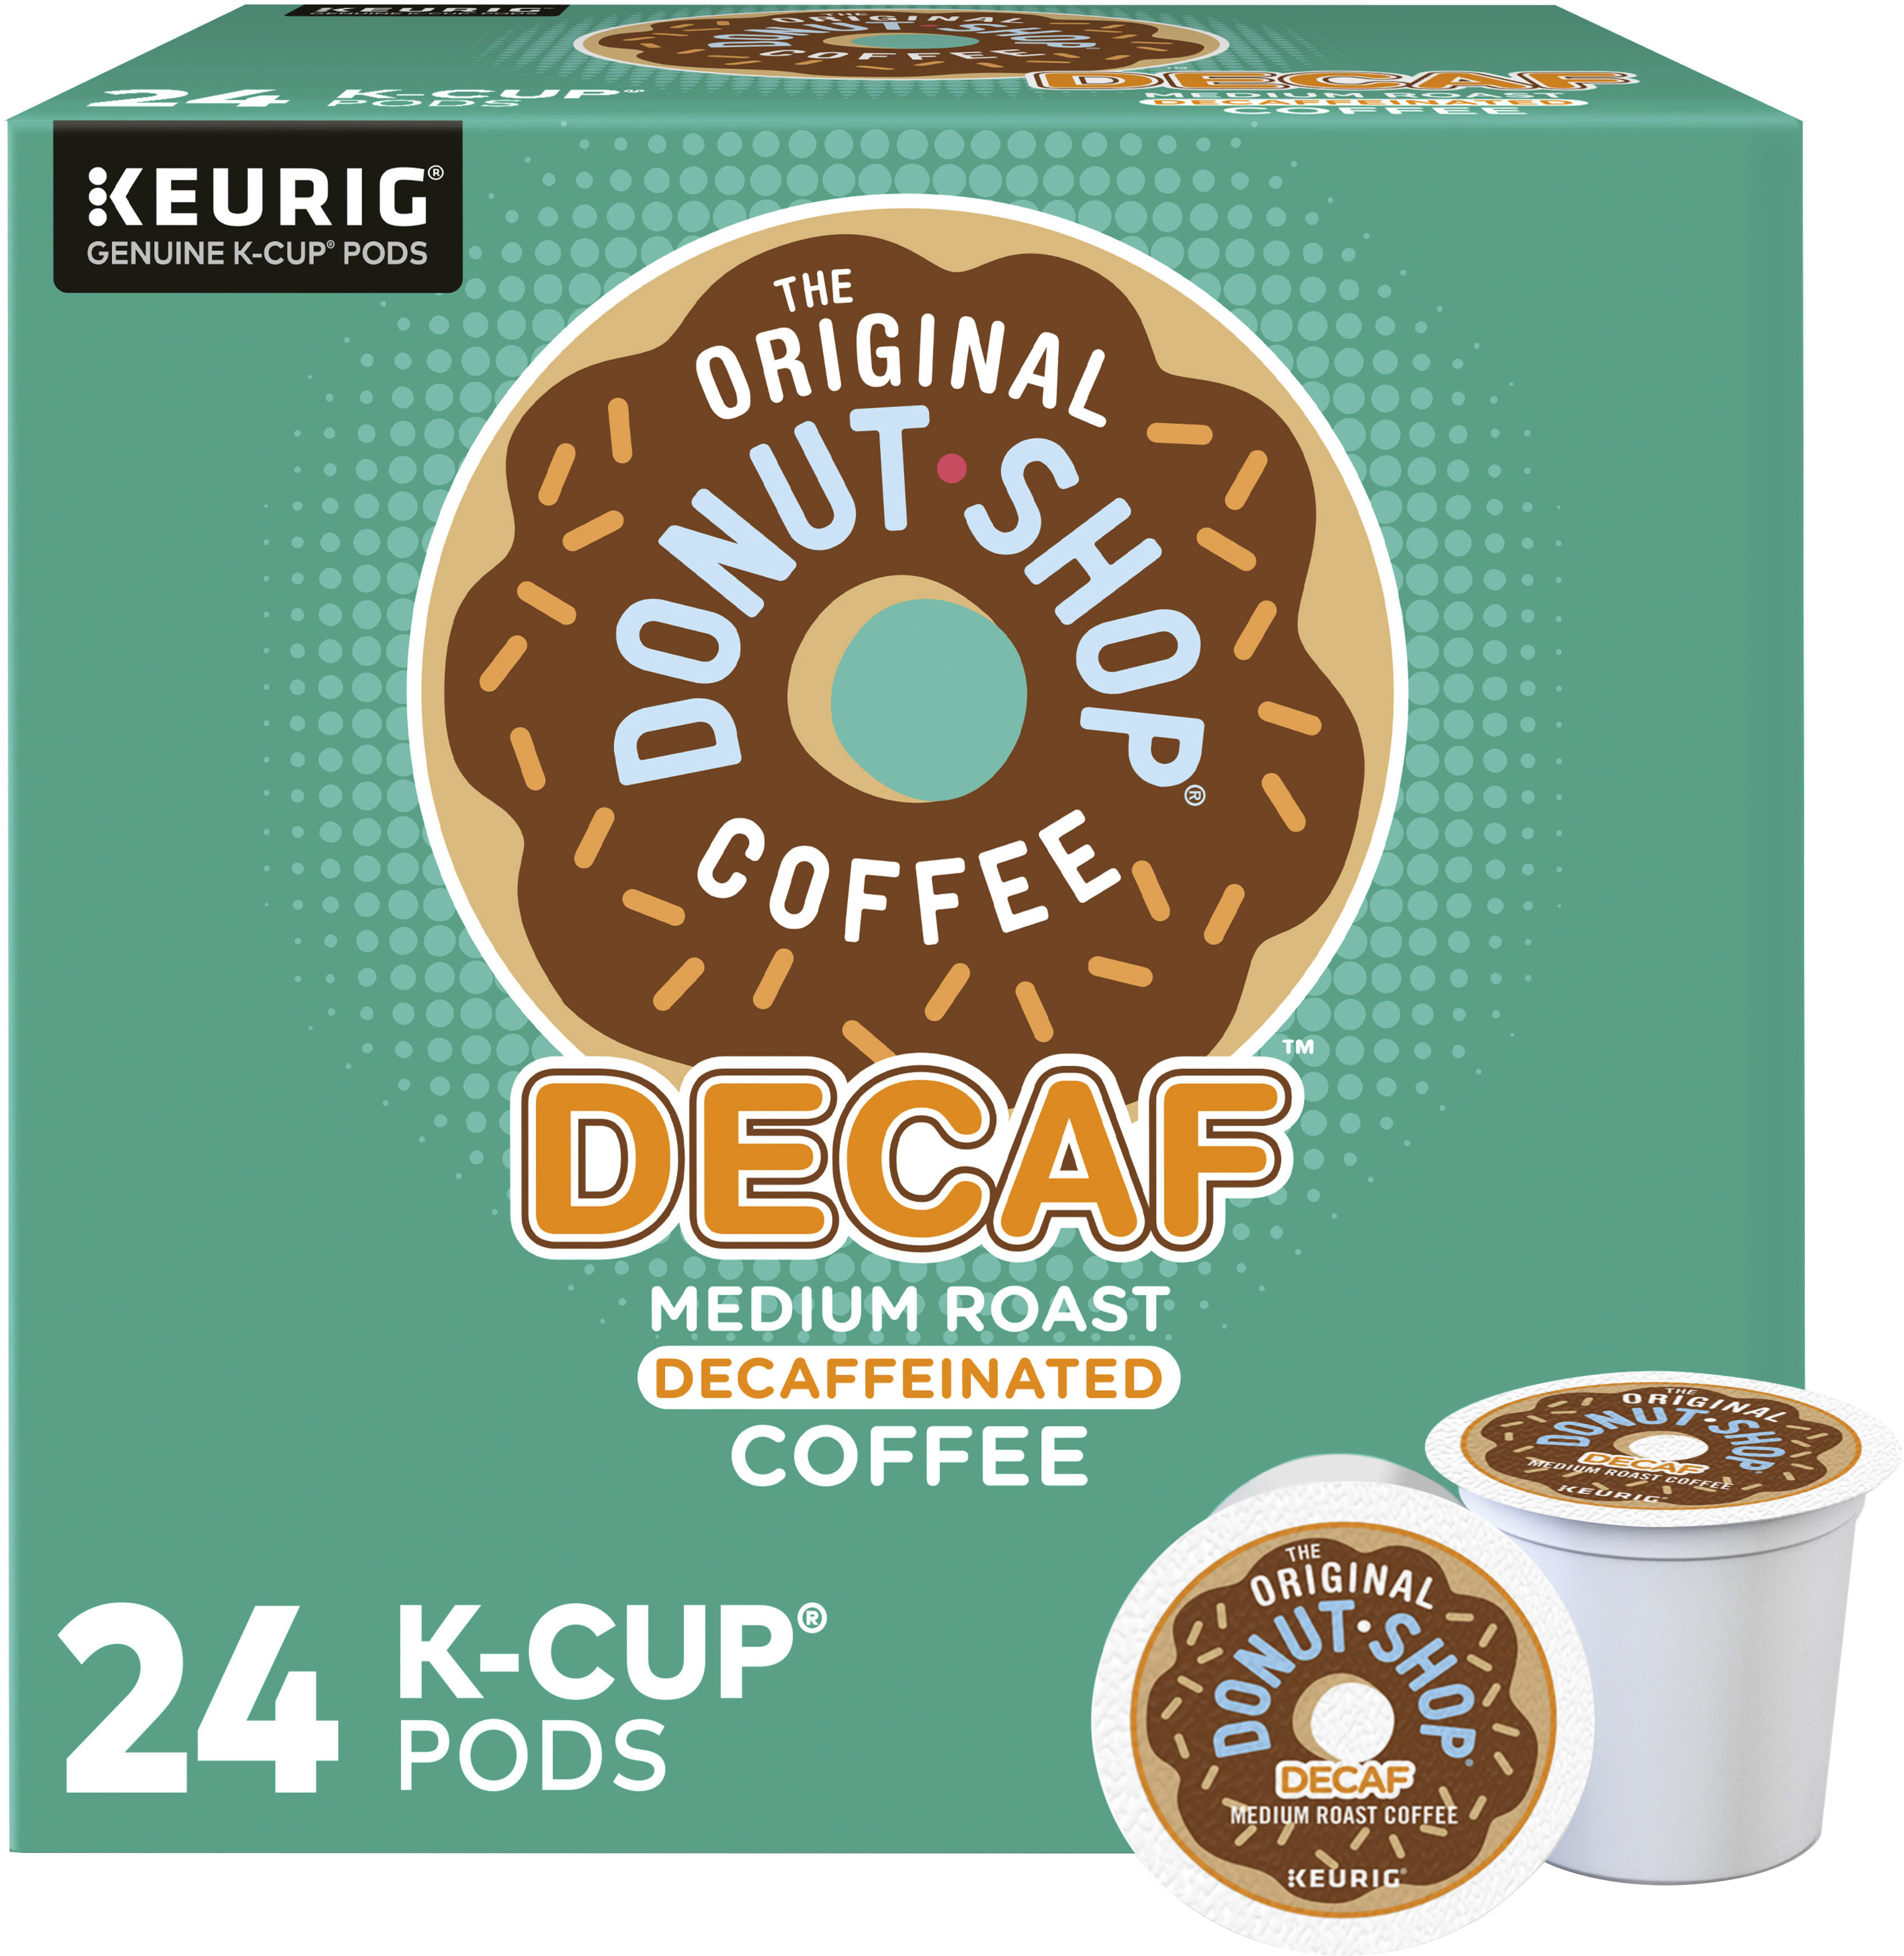 0611247374016 - THE ORIGINAL DONUT SHOP - DECAF KEURIG SINGLE-SERVE K-CUP PODS, MEDIUM ROAST COFFEE, 24 COUNT